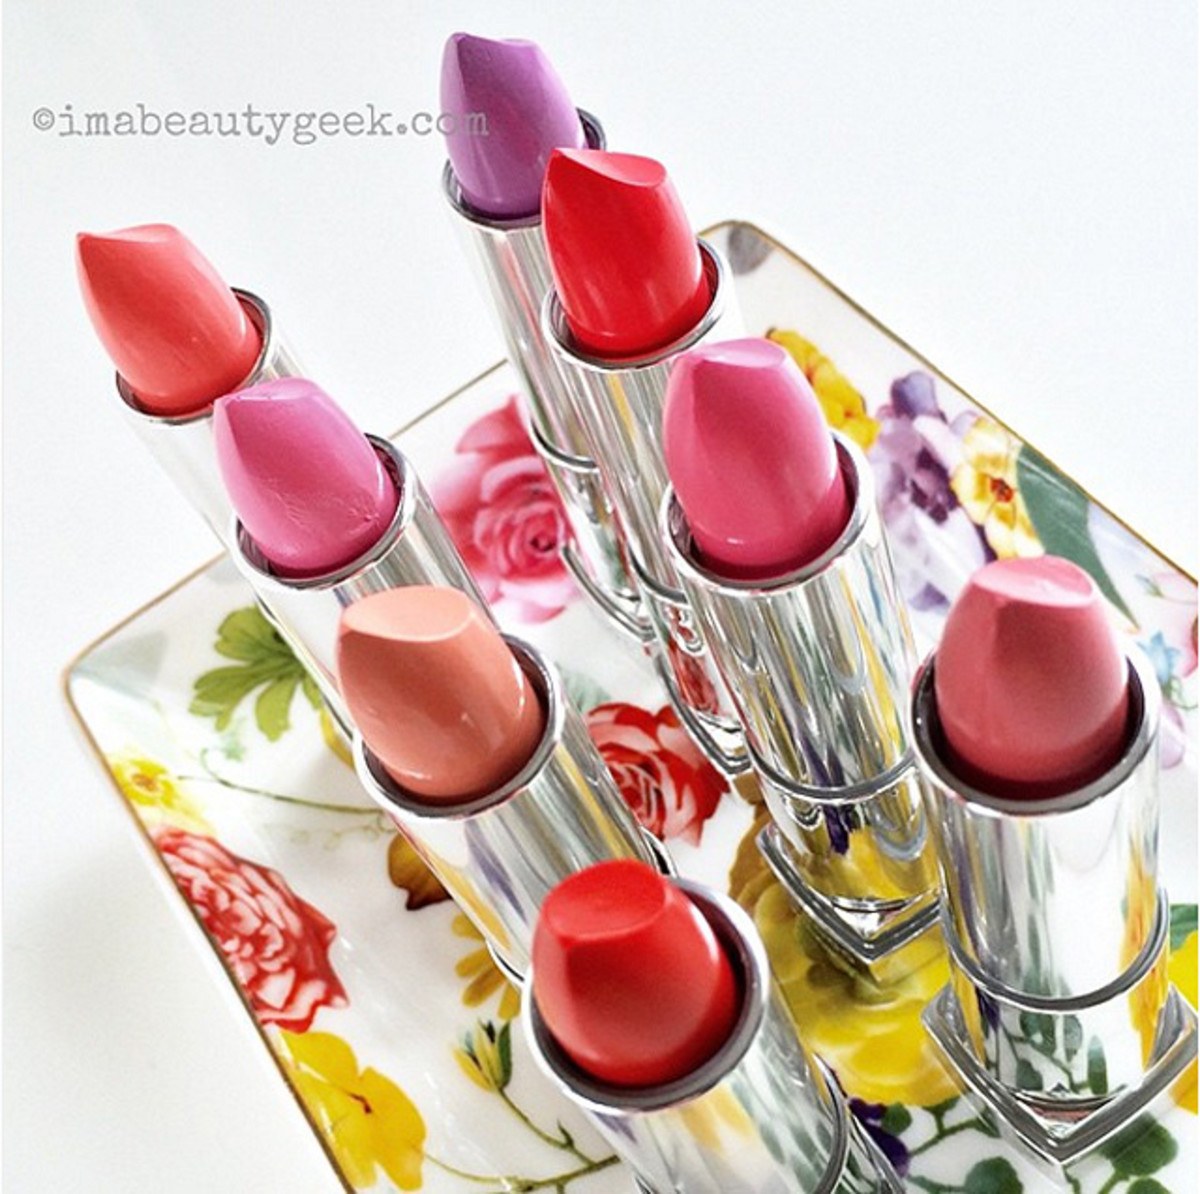 Pretty Pastels for Spring: Maybelline Rebel Blooms lipsticks